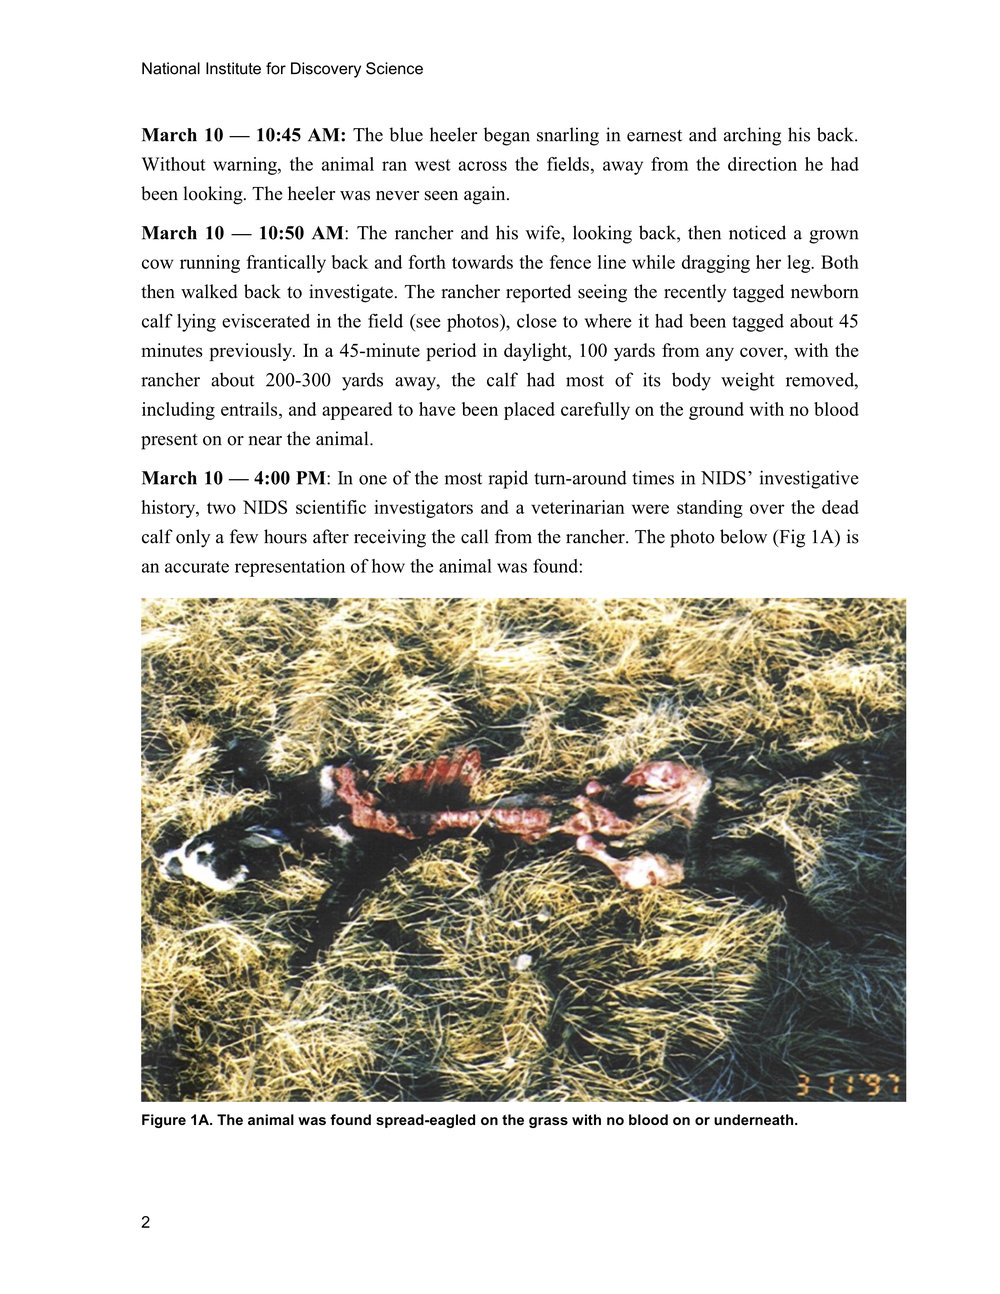 1997 ANIMAL MUTILATION REPORT 1.jpg